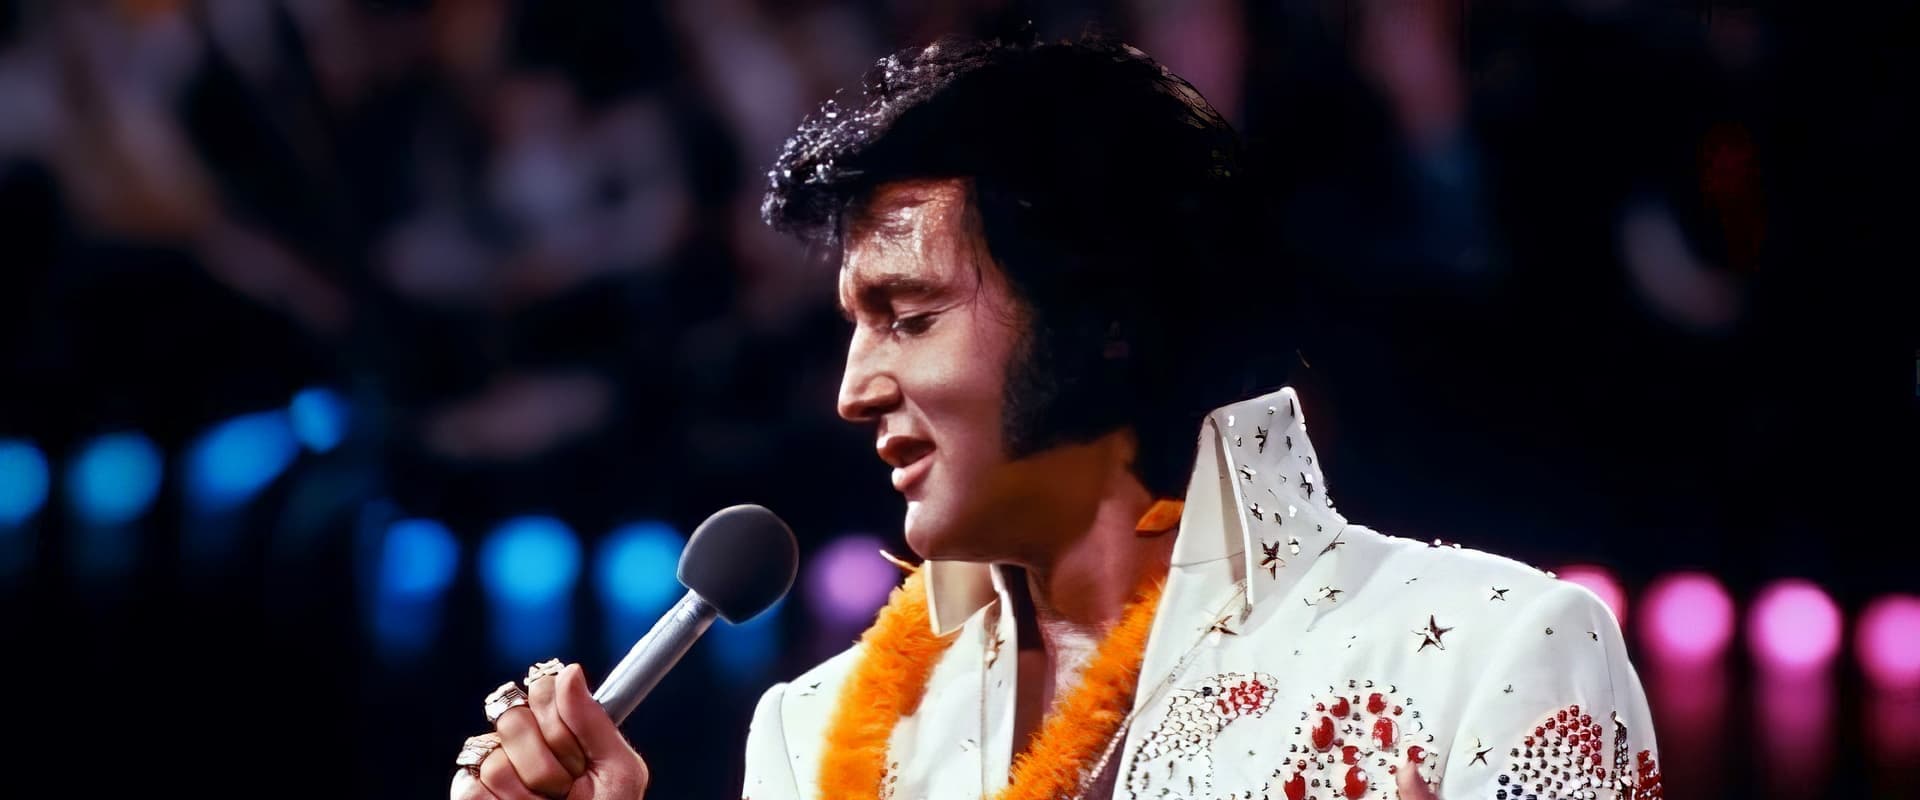 Elvis:  Aloha from Hawaii - Rehearsal Concert